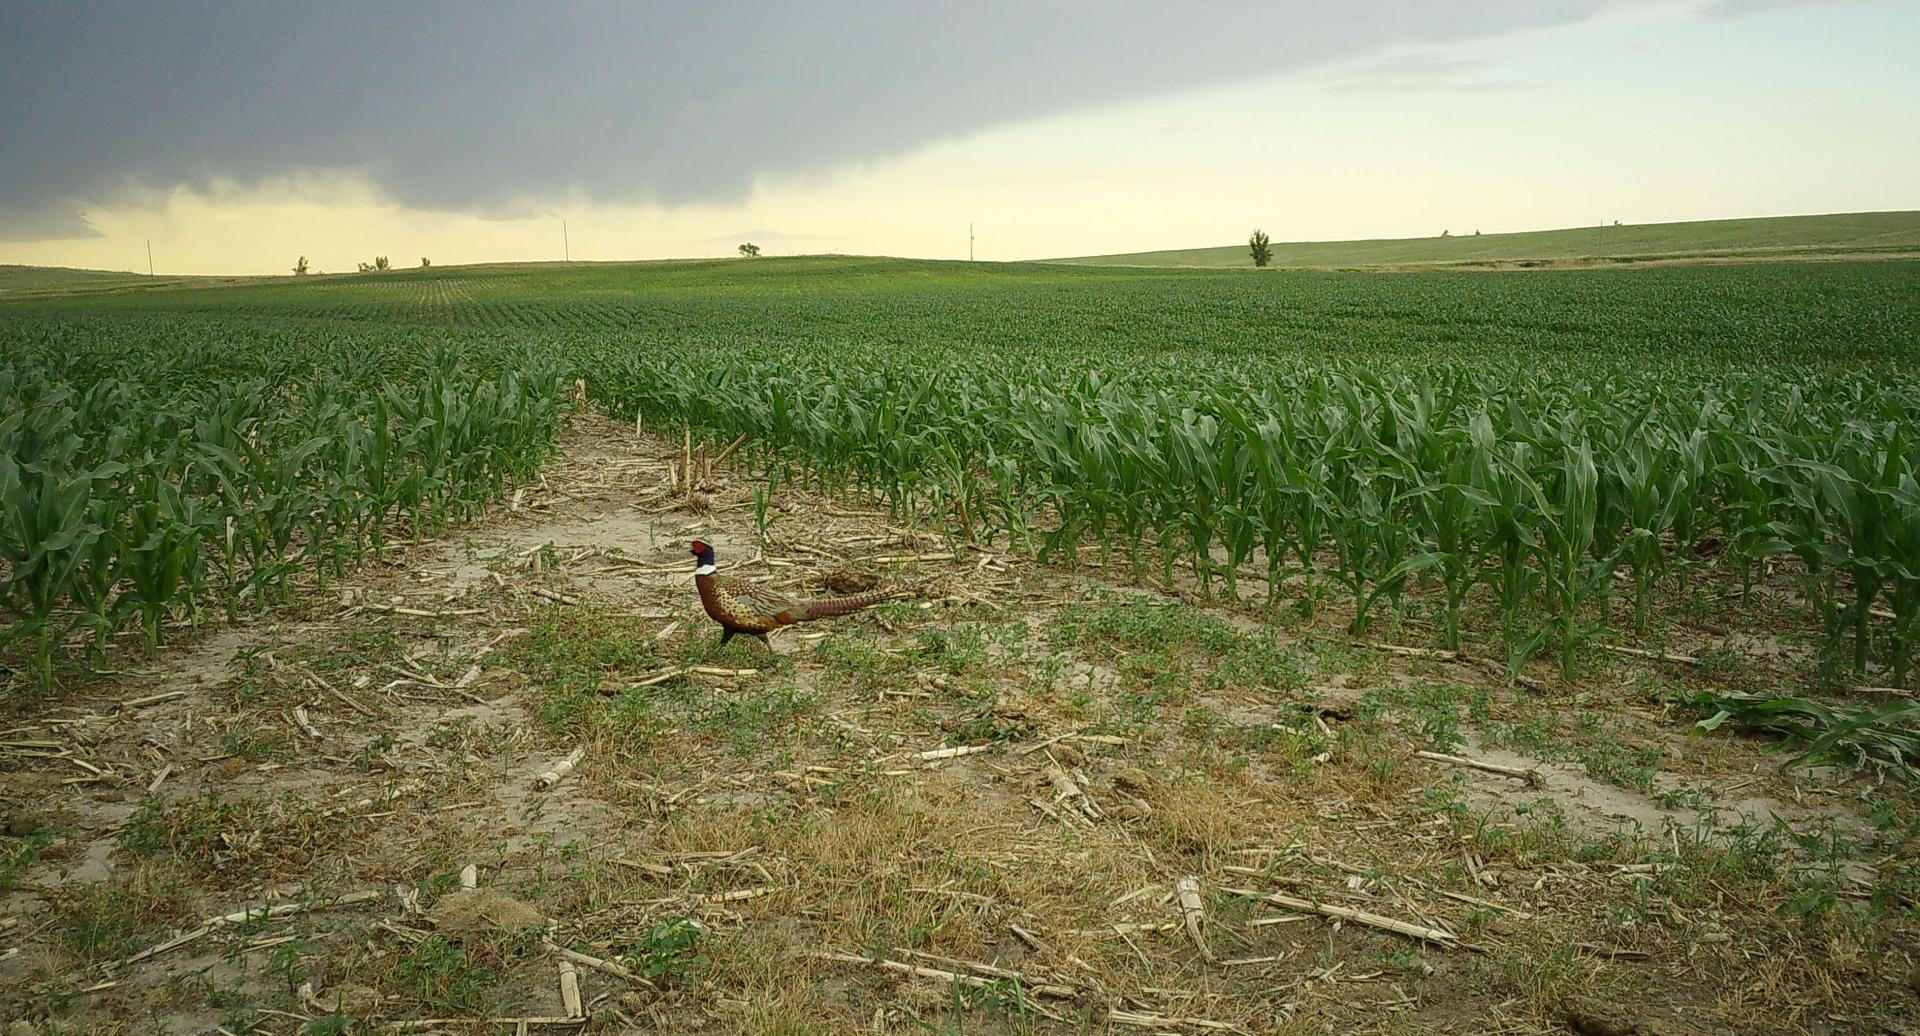 Pheasant in crop field